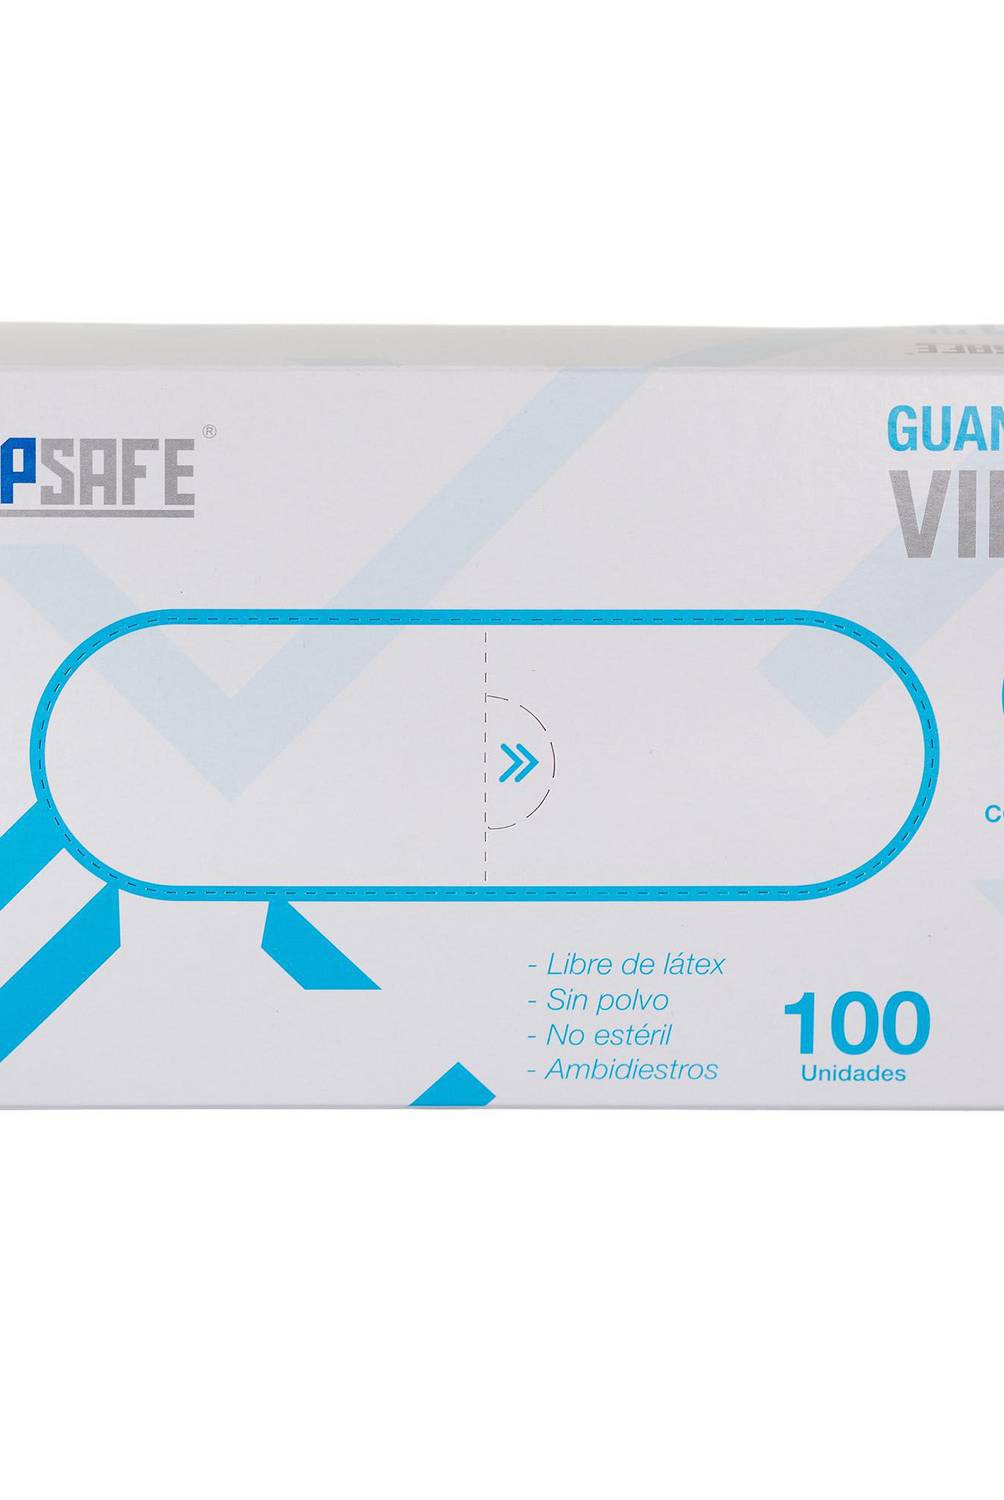 TOPSAFE - Guantes desechables de vinilo talla S caja x 100 unidades